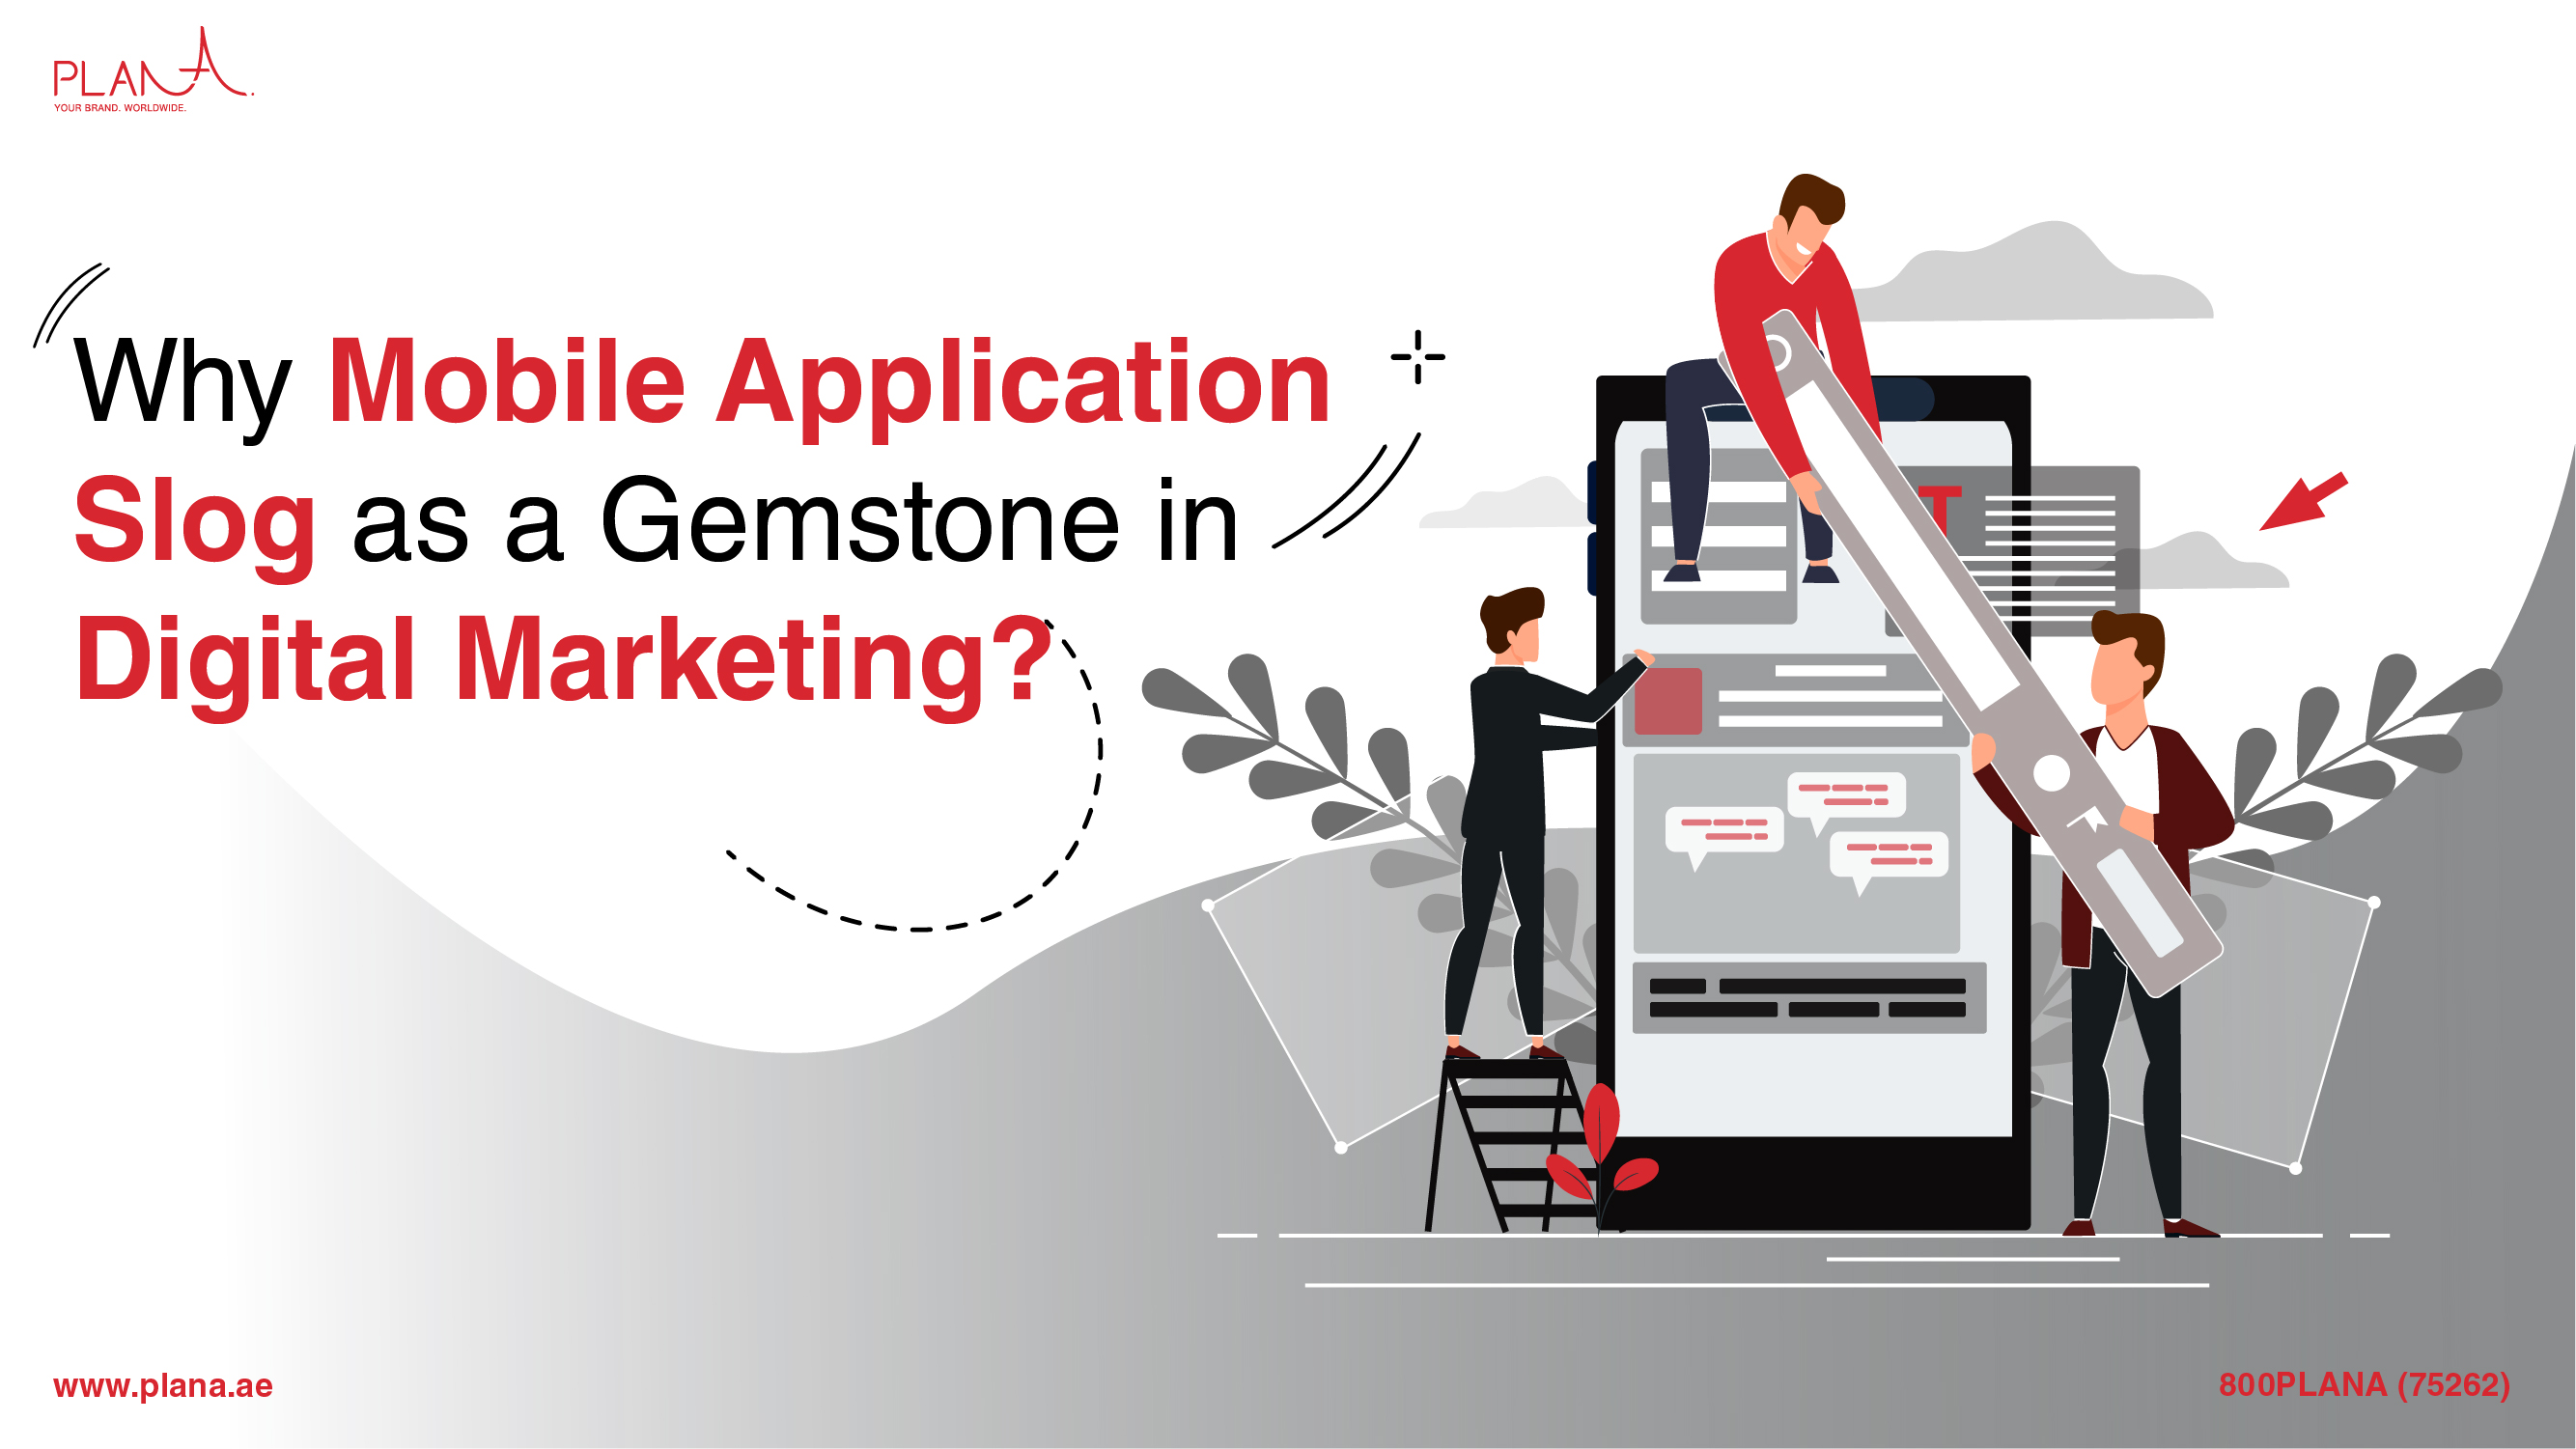 Why Mobile Application Slog as a Gemstone in Digital Marketing?